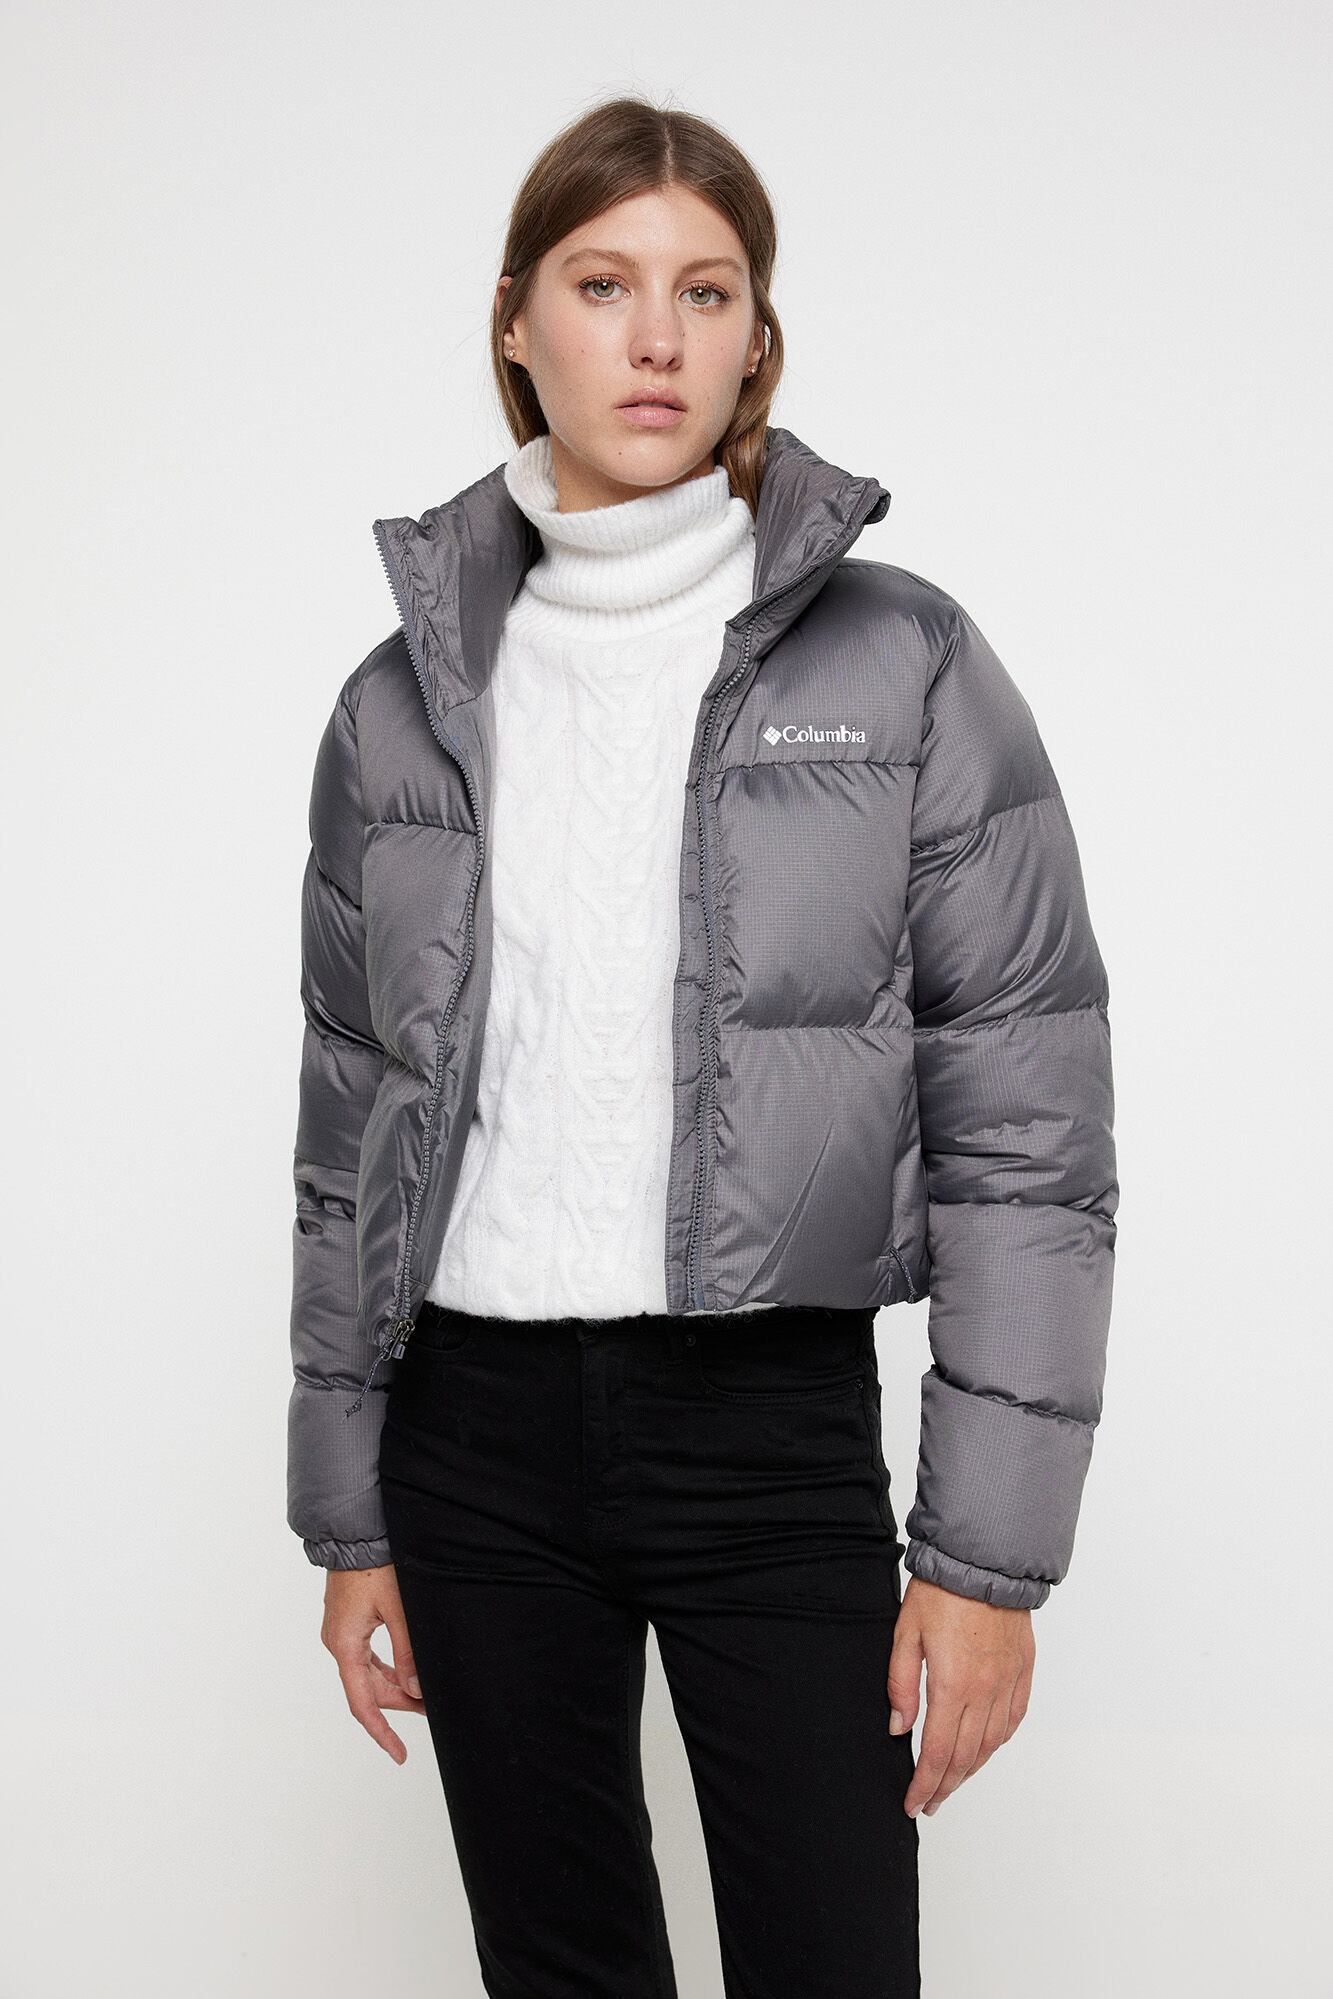 Columbia Puffect™ insulated jacket for women | Women's sweatshirts